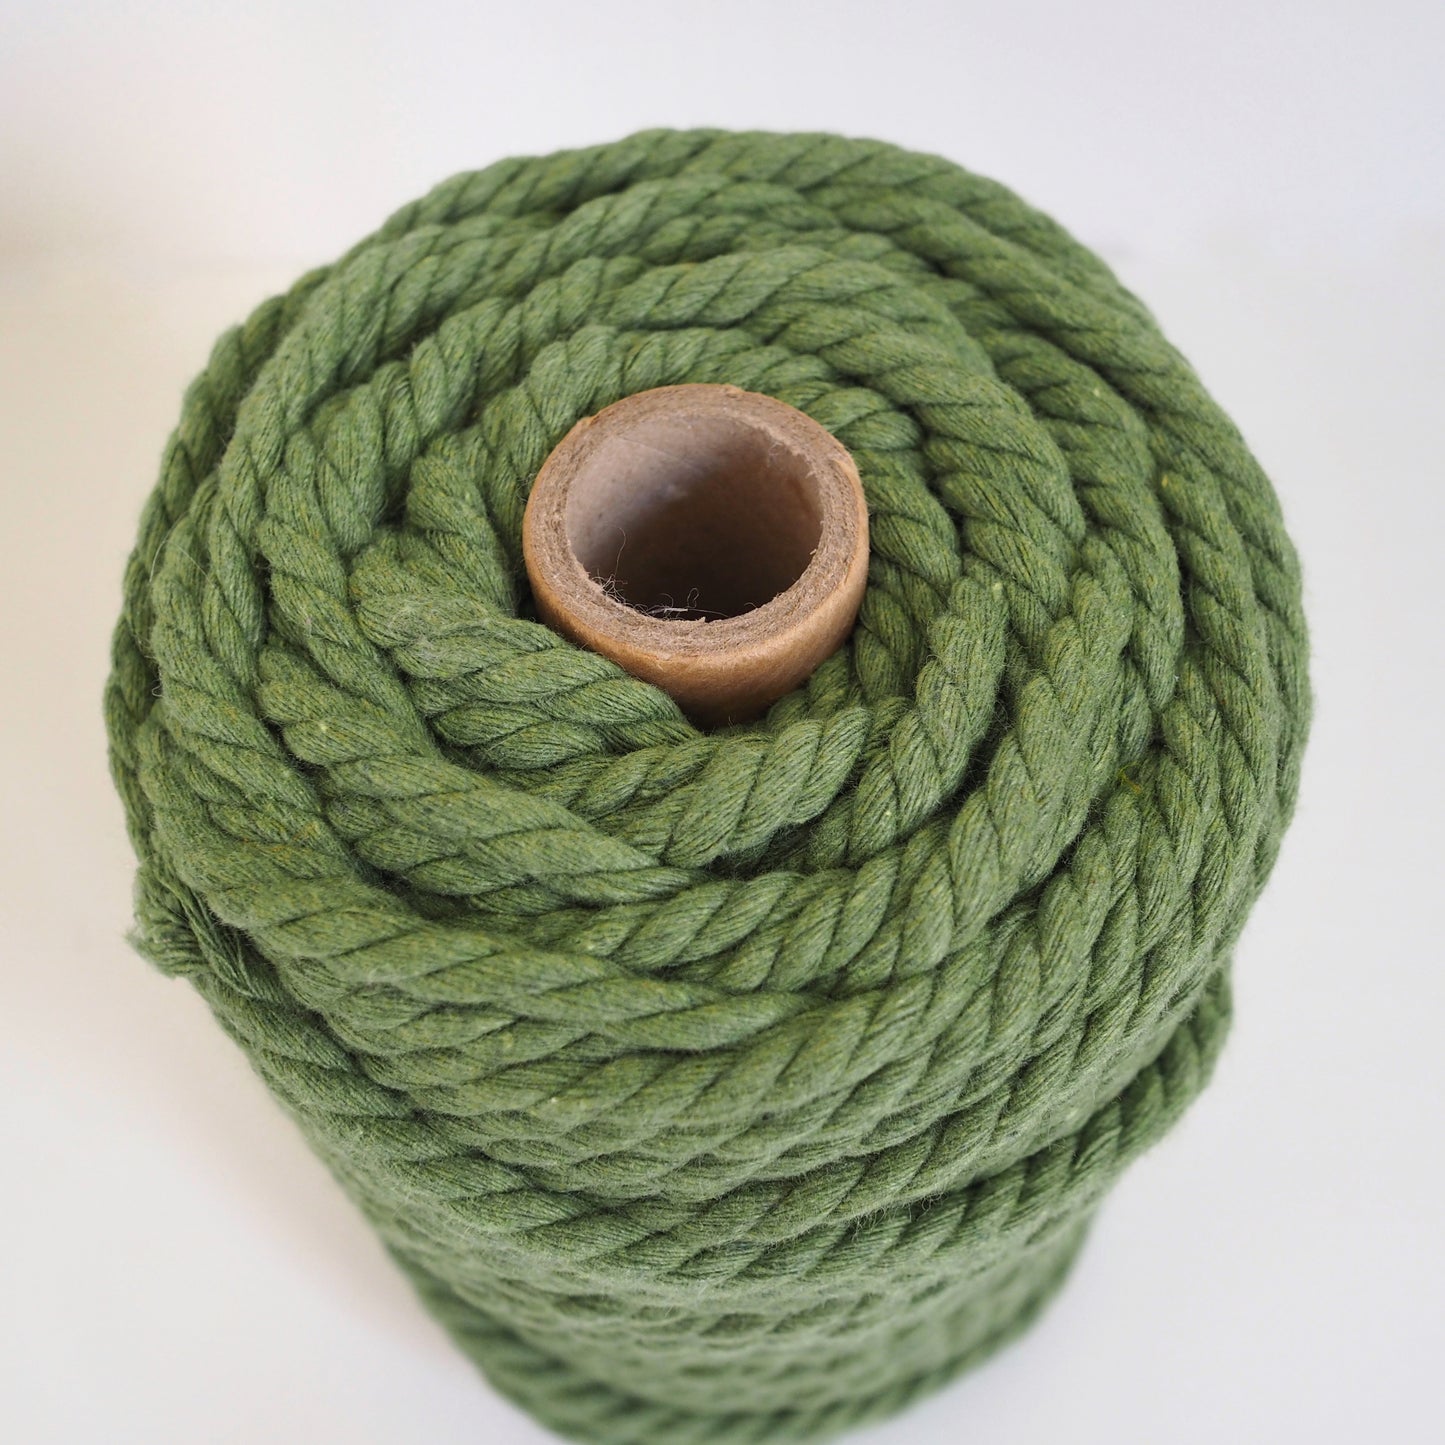 7mm Twisted Cotton Rope | Eucalyptus Green The Joyful Studio